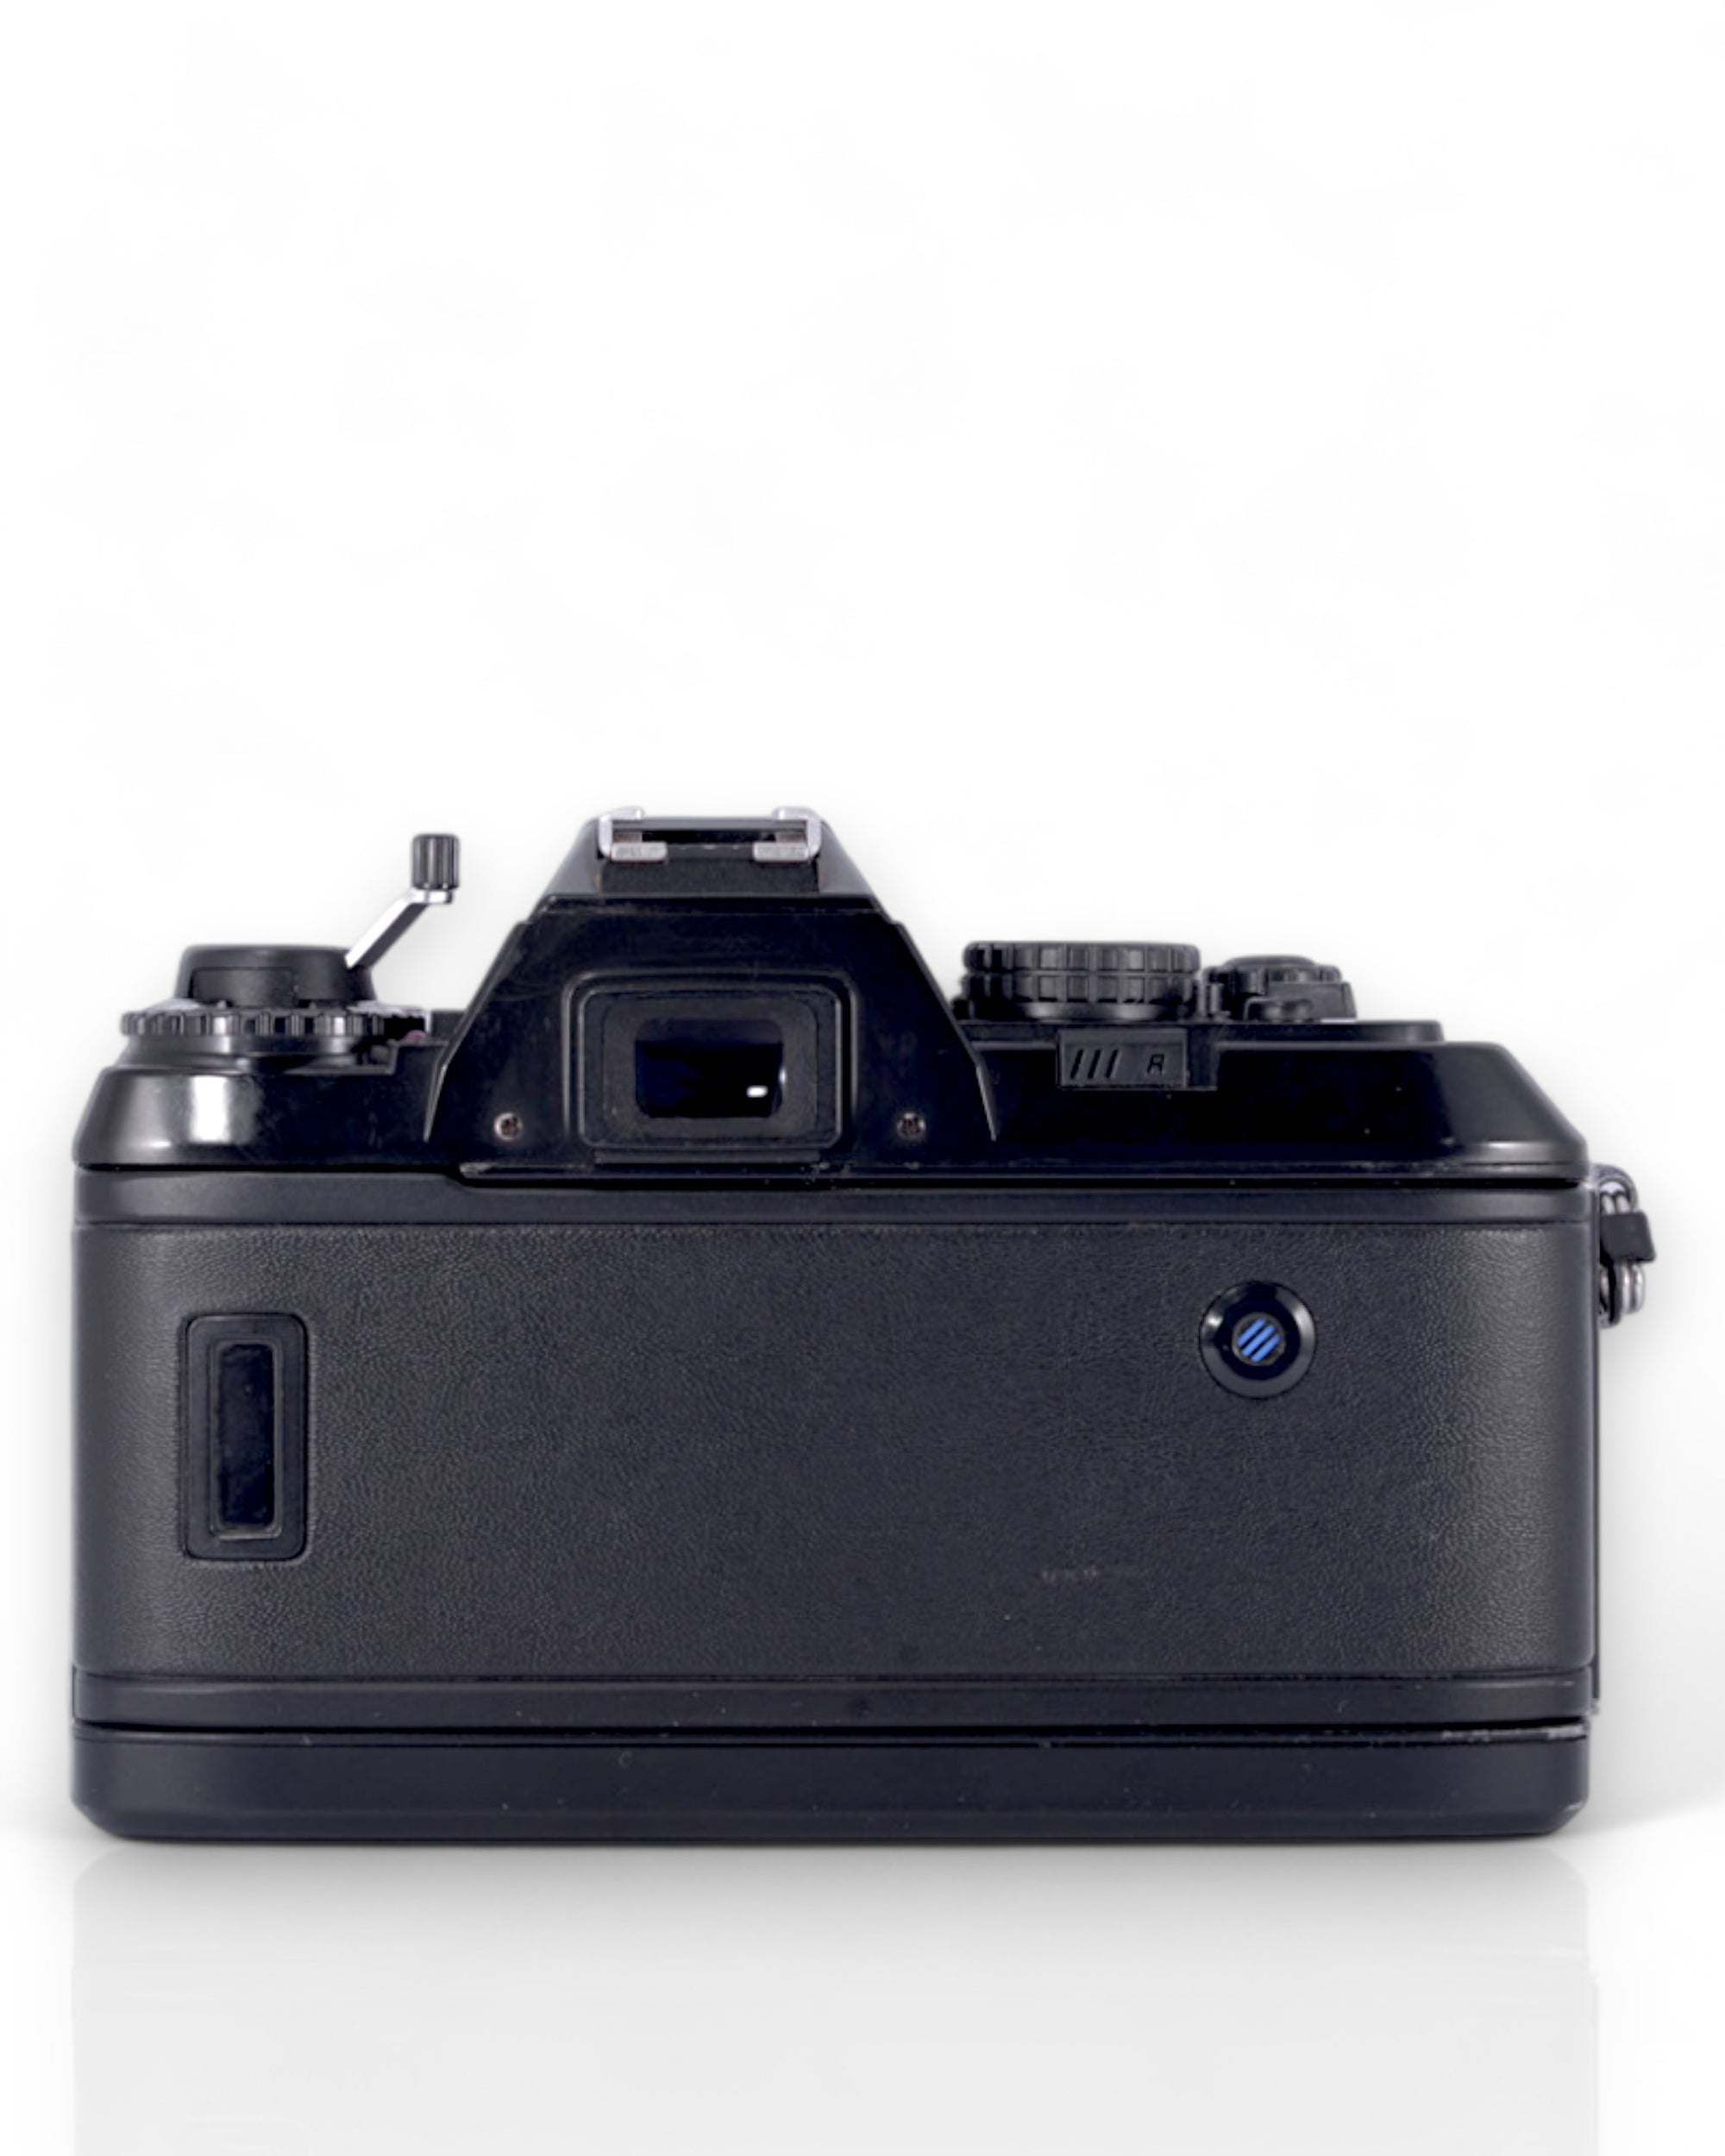 Nikon F-501 35mm SLR film camera with 55mm lens